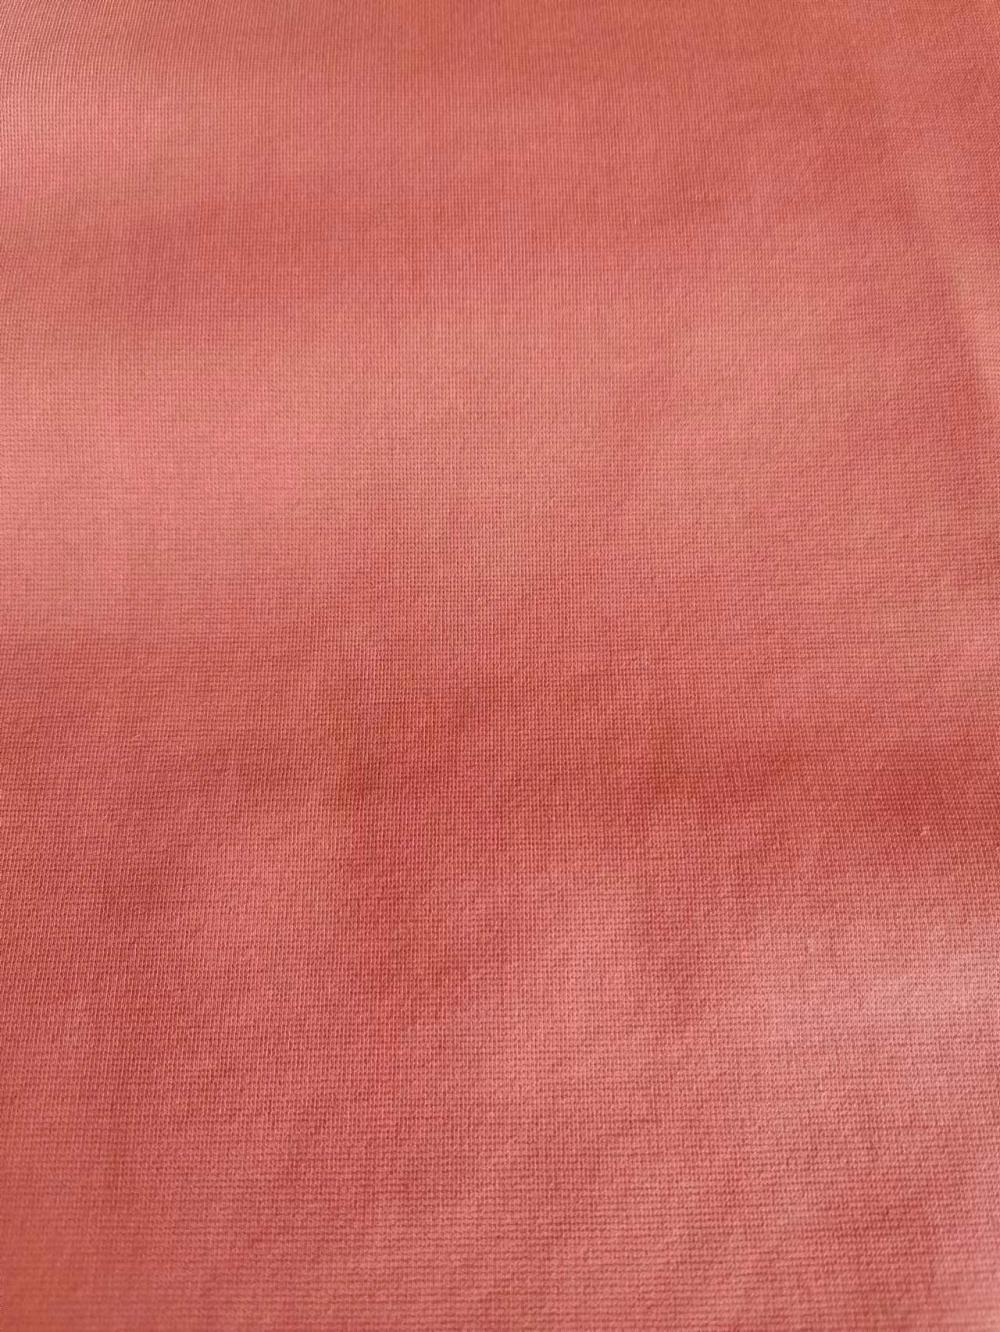 Cotton Nylon Spandex Ponti Roma Plain Dyed Fabric 3 Jpg